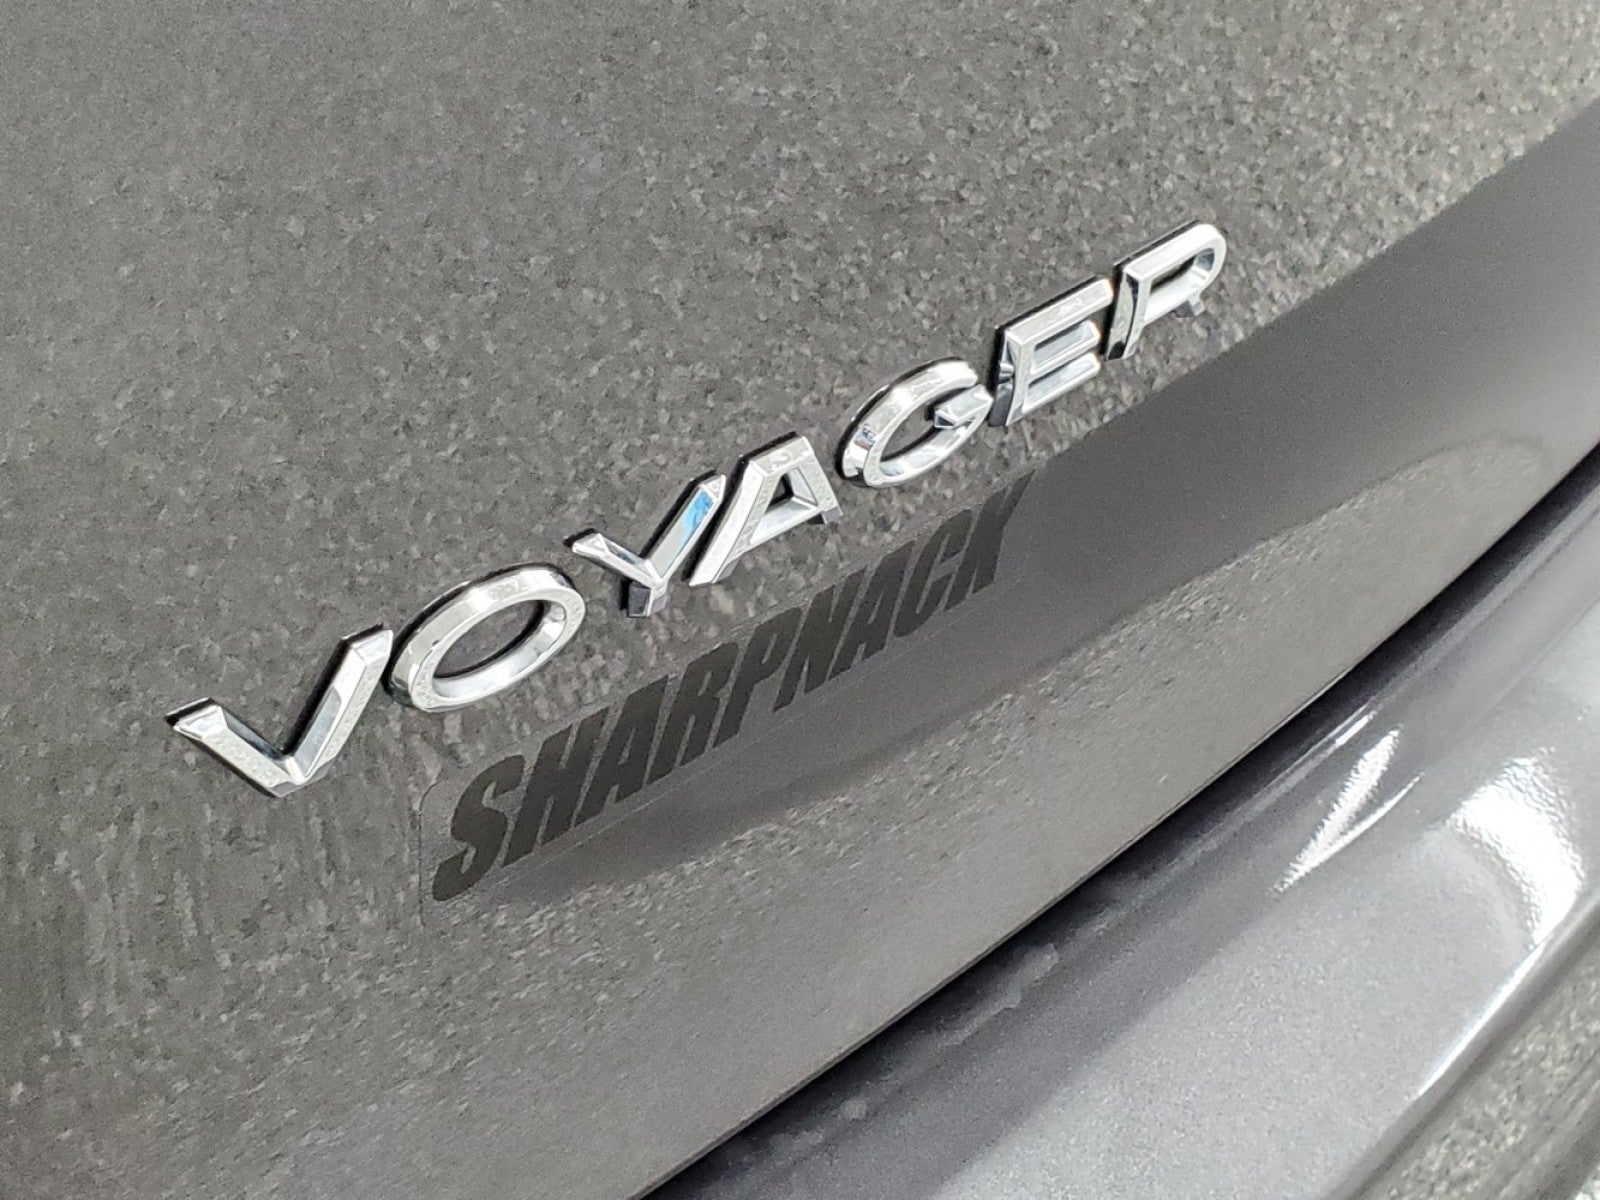 2022 Chrysler Voyager (fleet-only) LX FWD